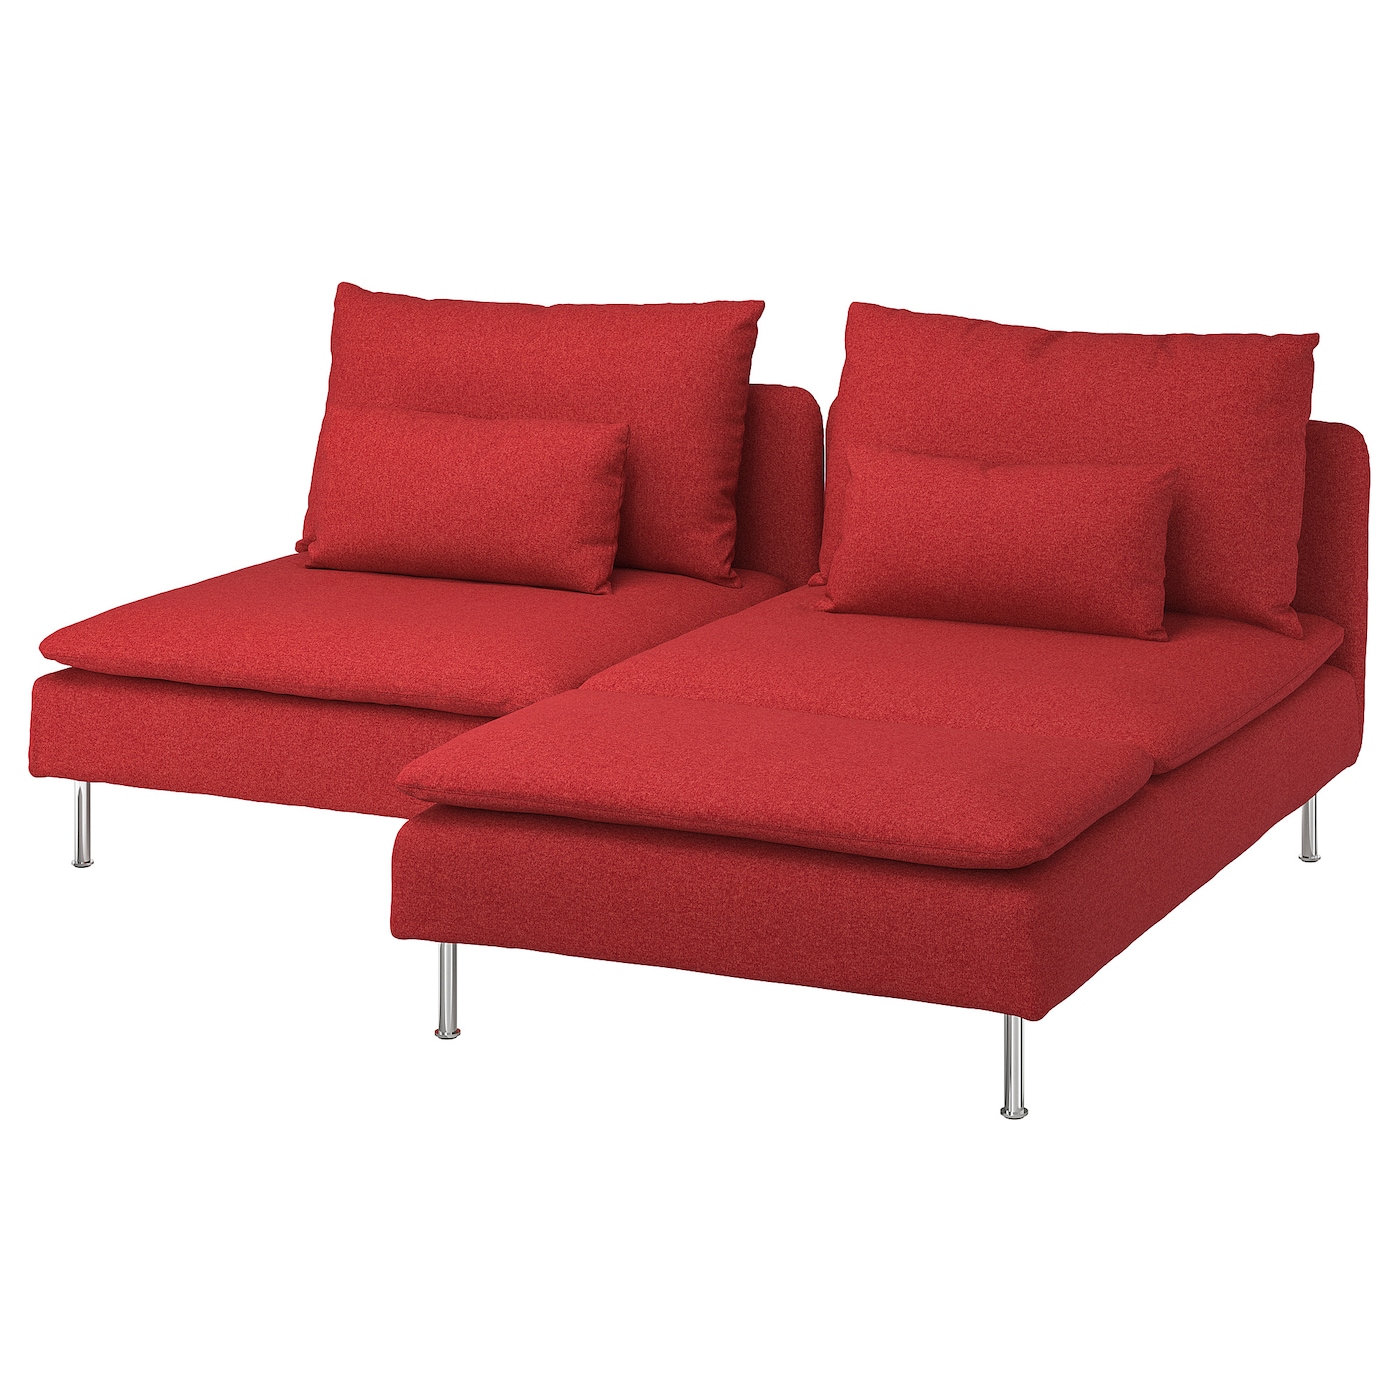 2-местный диван с шезлонгом - IKEA SÖDERHAMN/SODERHAMN/СЁДЕРХАМН ИКЕА, 186х69х151 см, красный